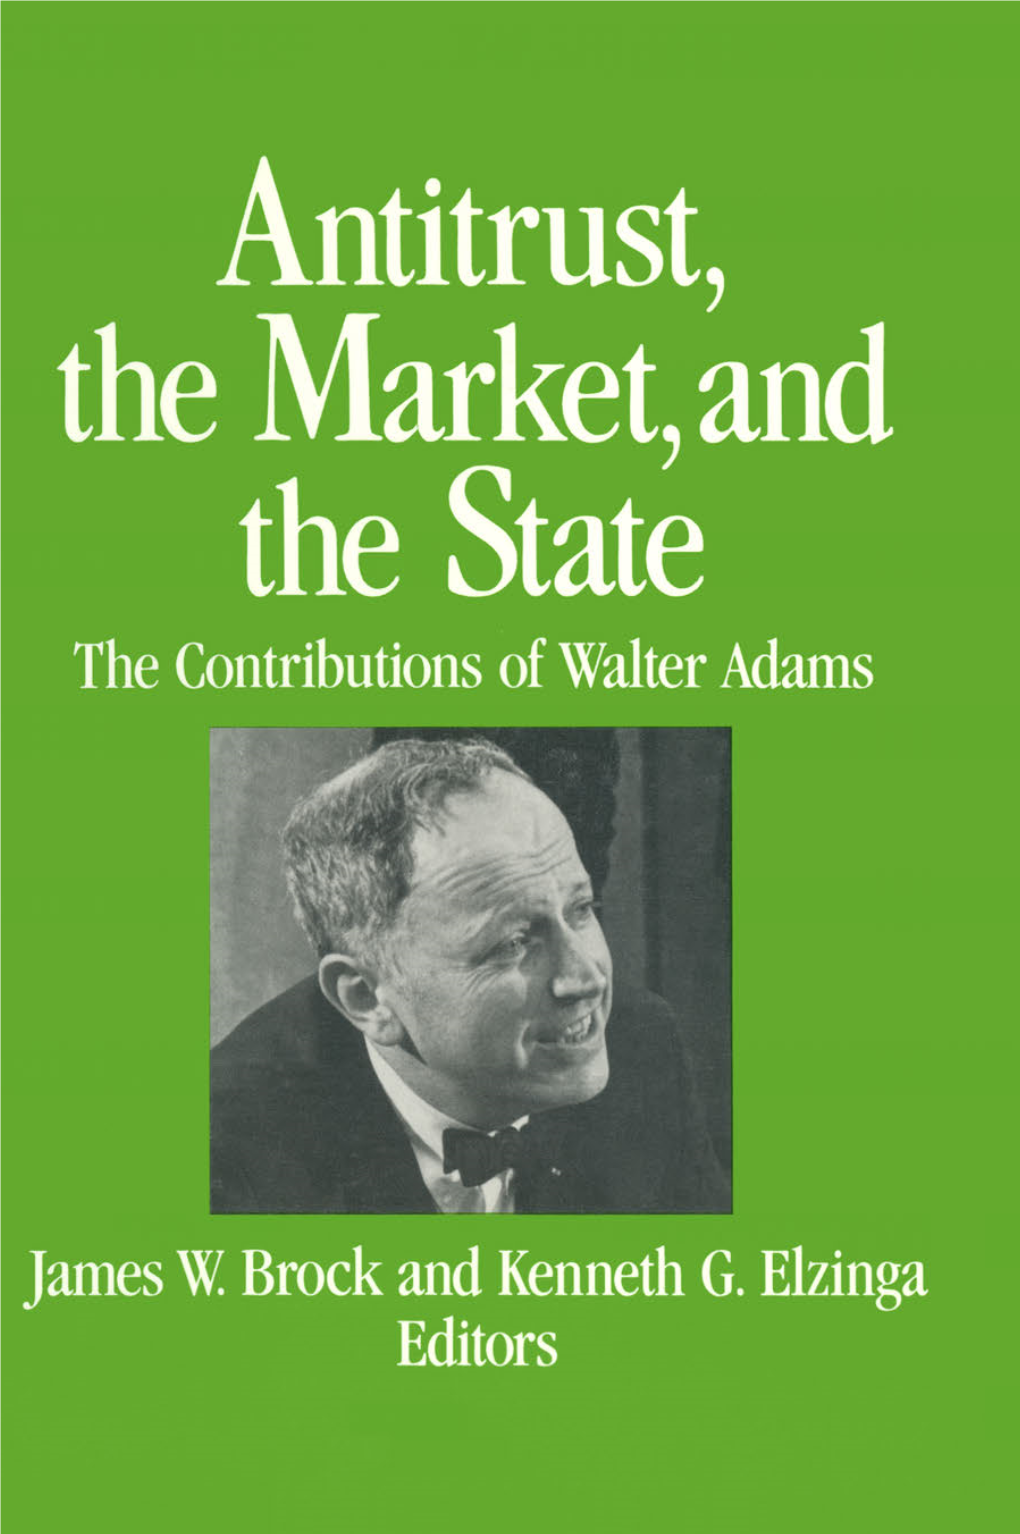 Contributions of Walter Adams